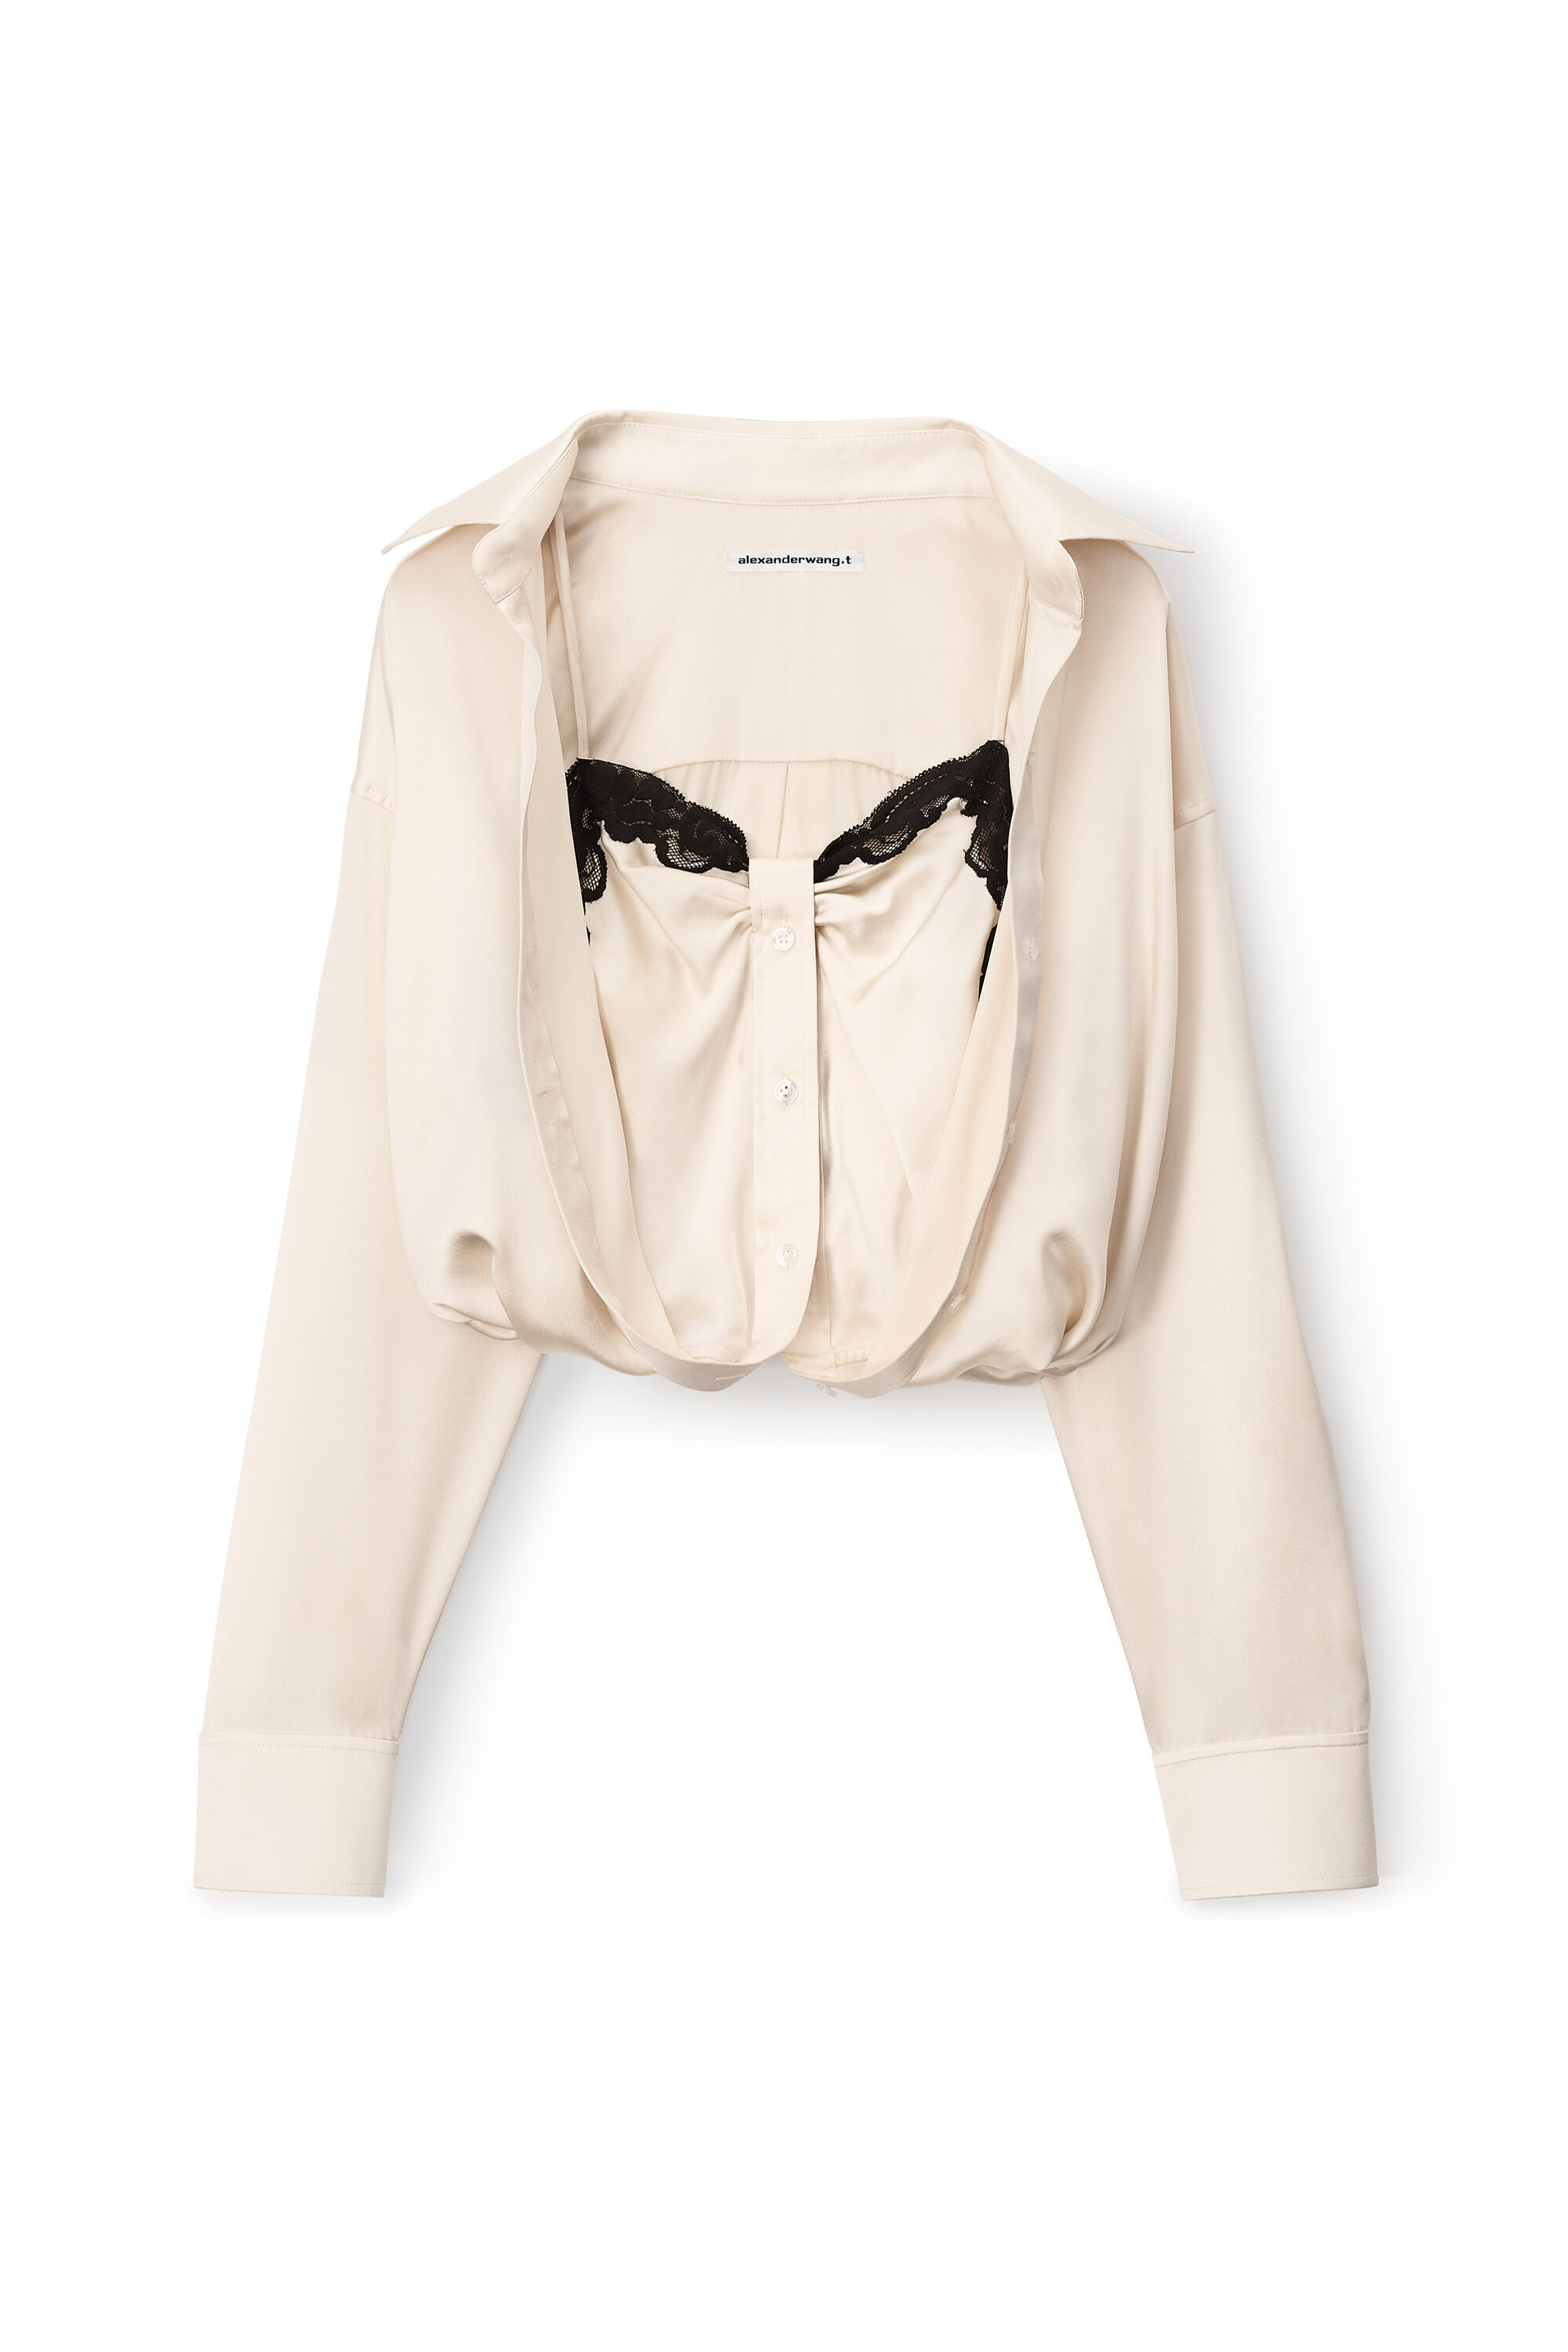 Alexander Wang layered silk-charmeuse shirt - White